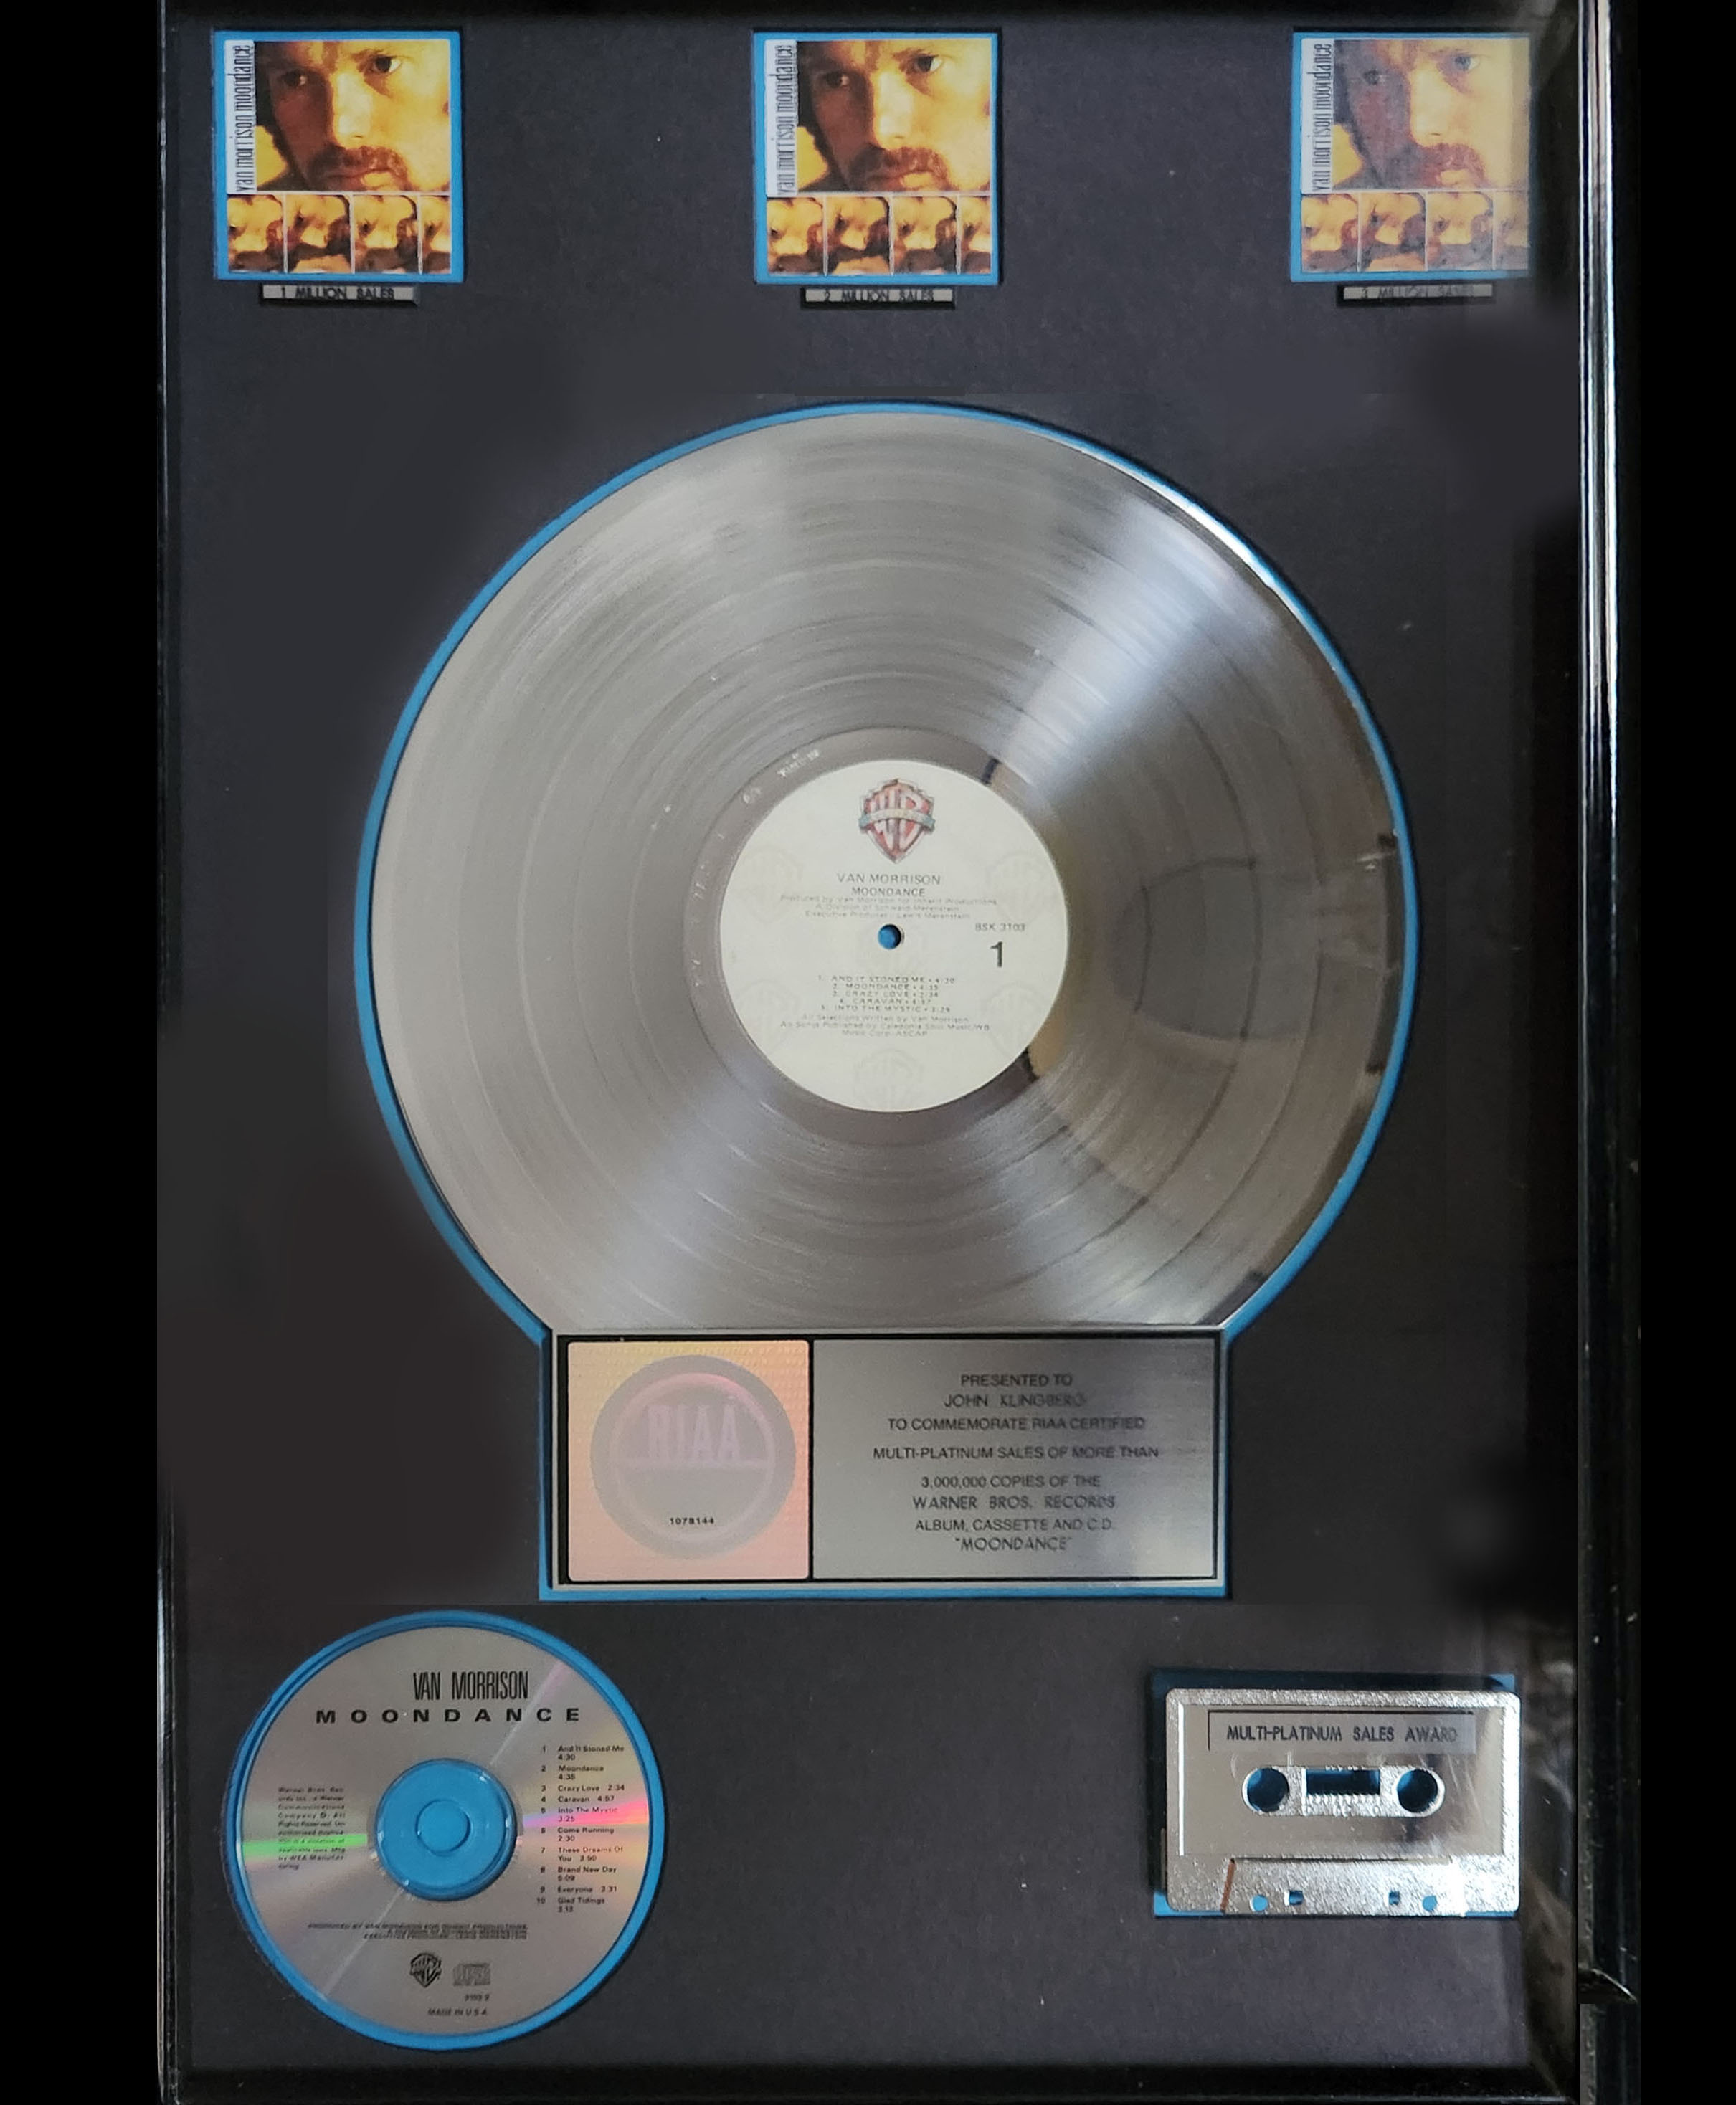 Moondance multi-platinum sales award, 1992